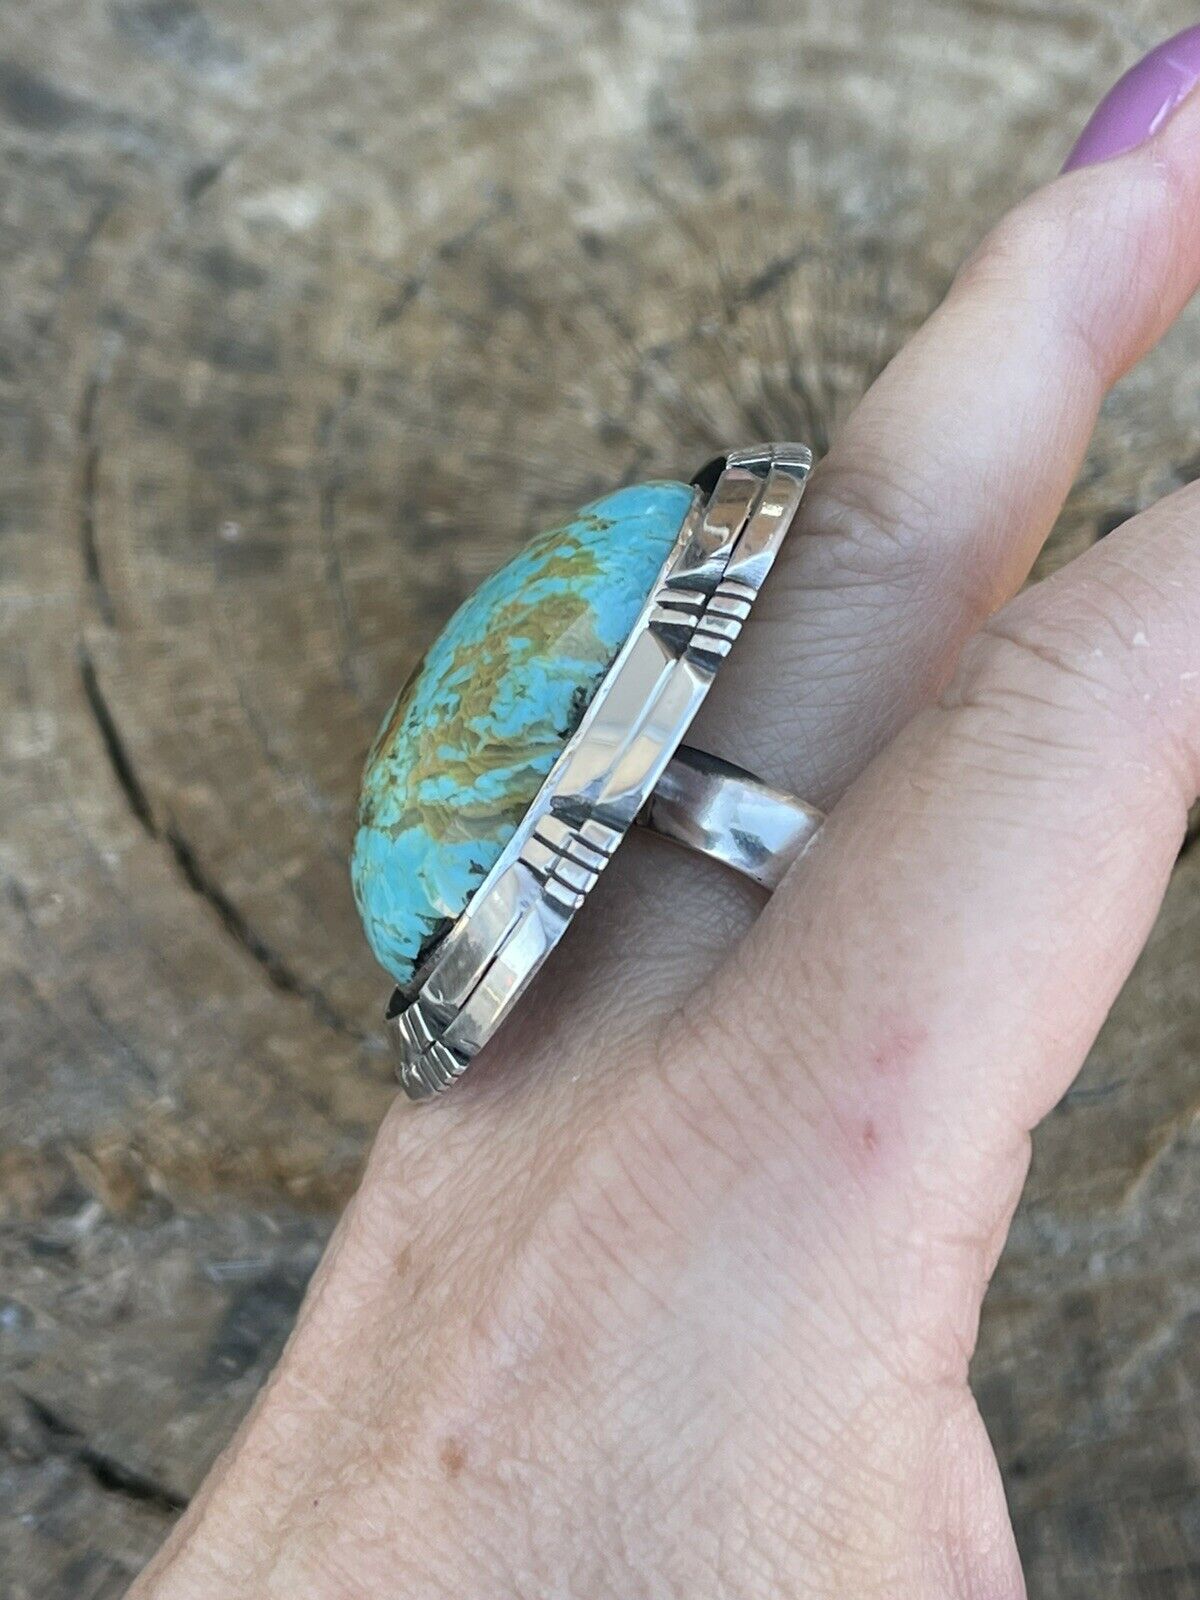 Navajo Sterling Silver Turquoise Shadow Box Ring Sz 8.5